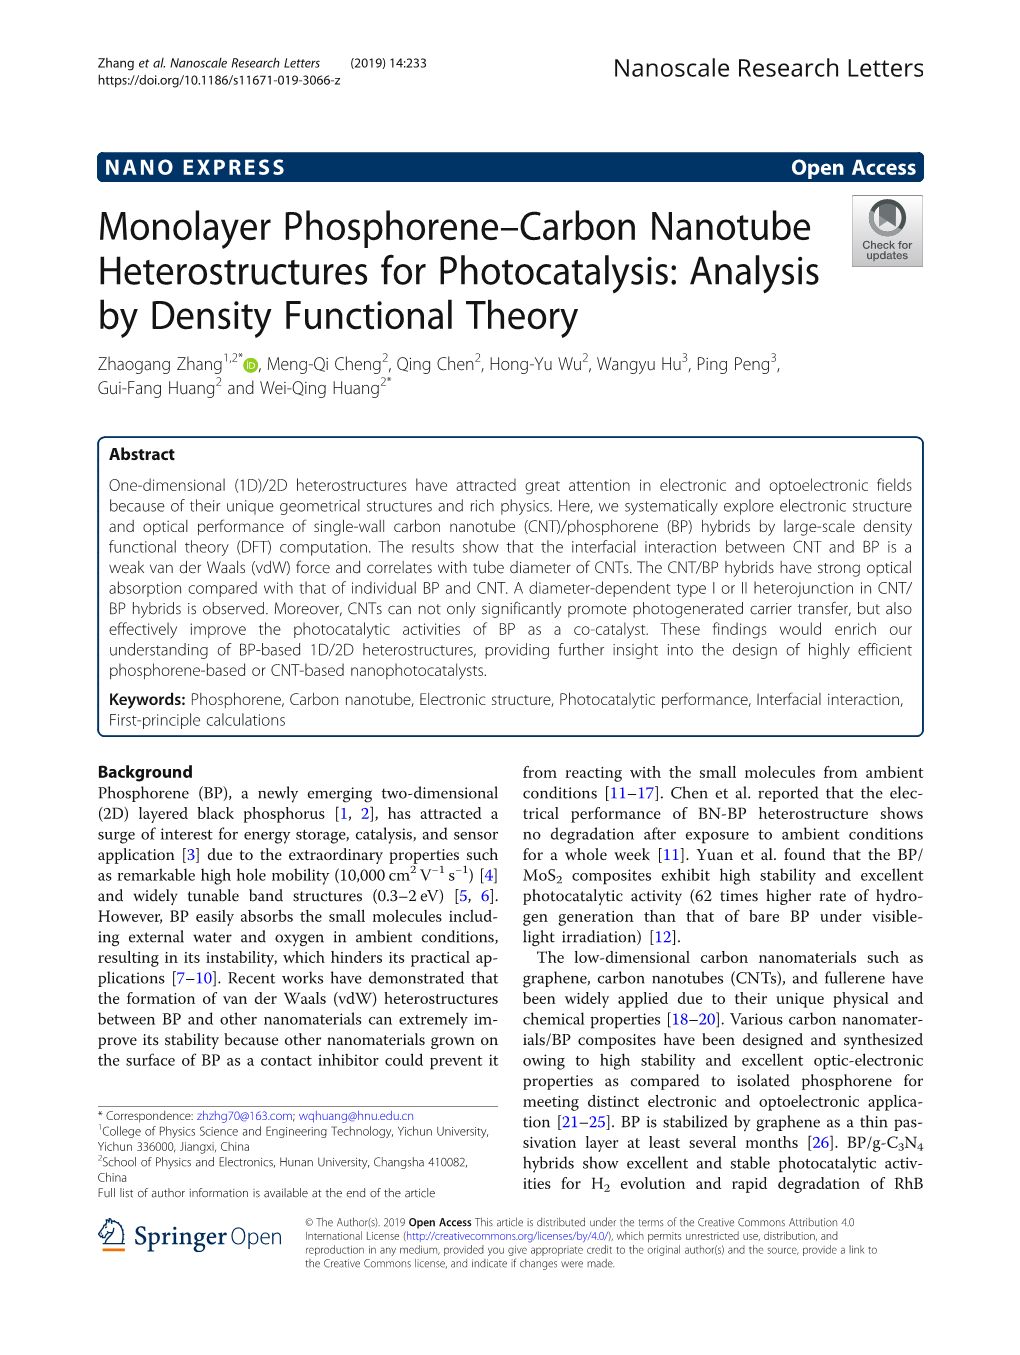 Monolayer Phosphorene–Carbon Nanotube Heterostructures For